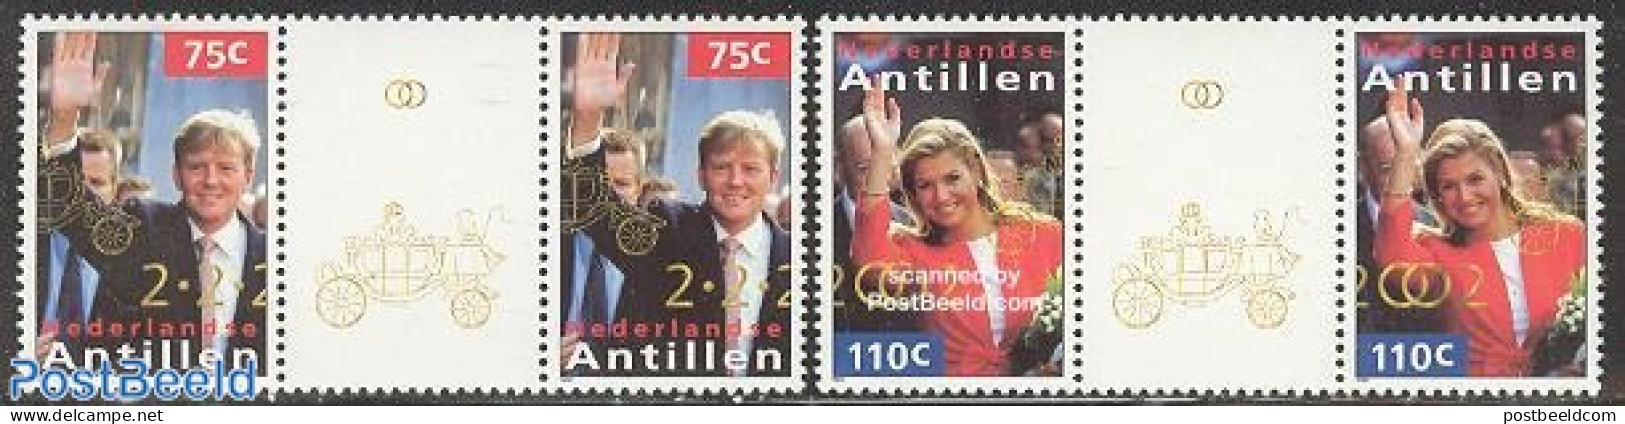 Netherlands Antilles 2002 Alexander & Maxima Wedding 2v, Gutter Pairs, Mint NH, History - Kings & Queens (Royalty) - Royalties, Royals